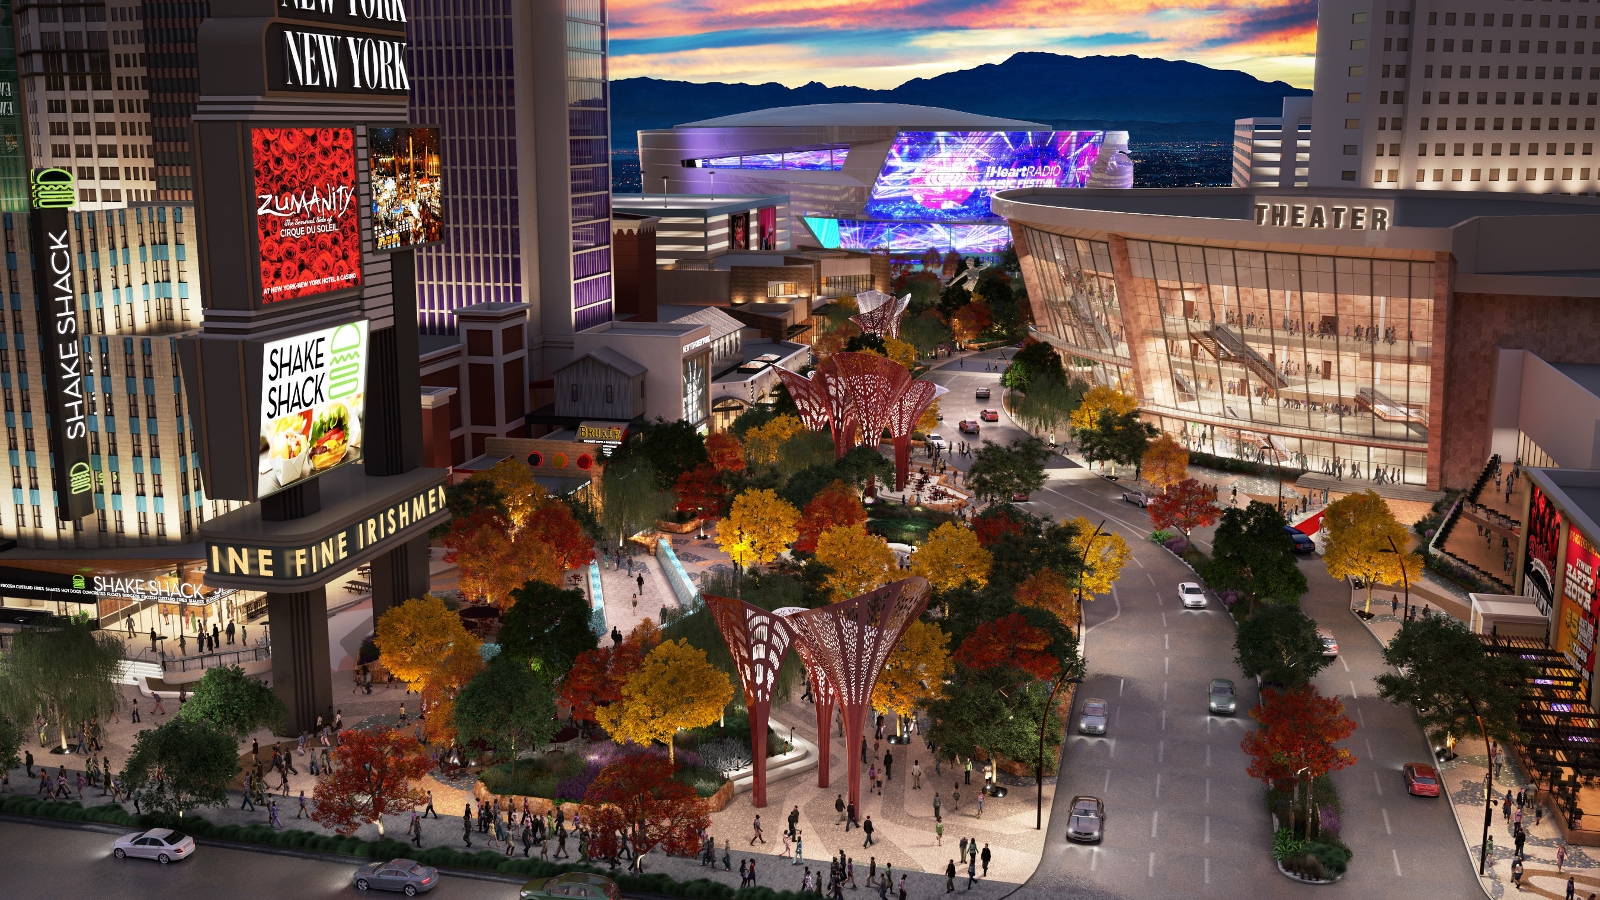 Monte Carlo Las Vegas to open 5,000-seat theater.